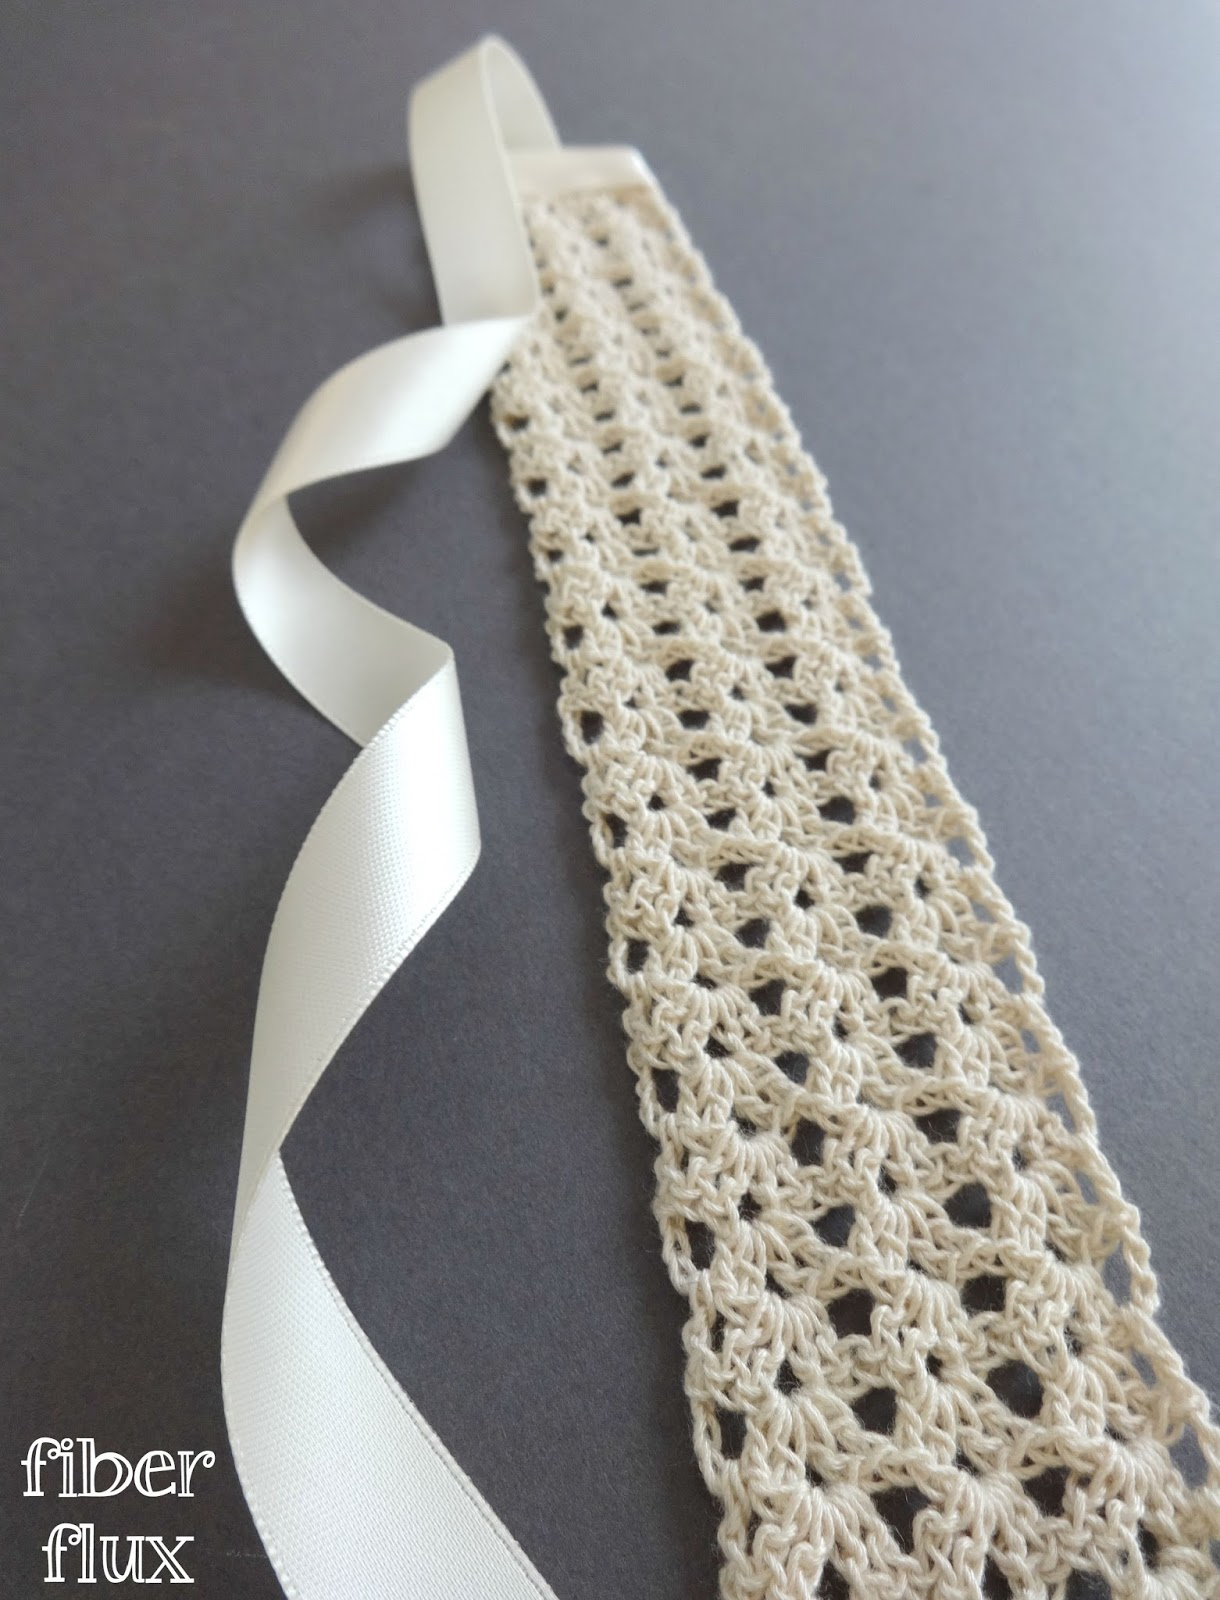 Crochet Thread Patterns Fiber Flux Free Crochet Patternbamboo Lace Headband And Necklace